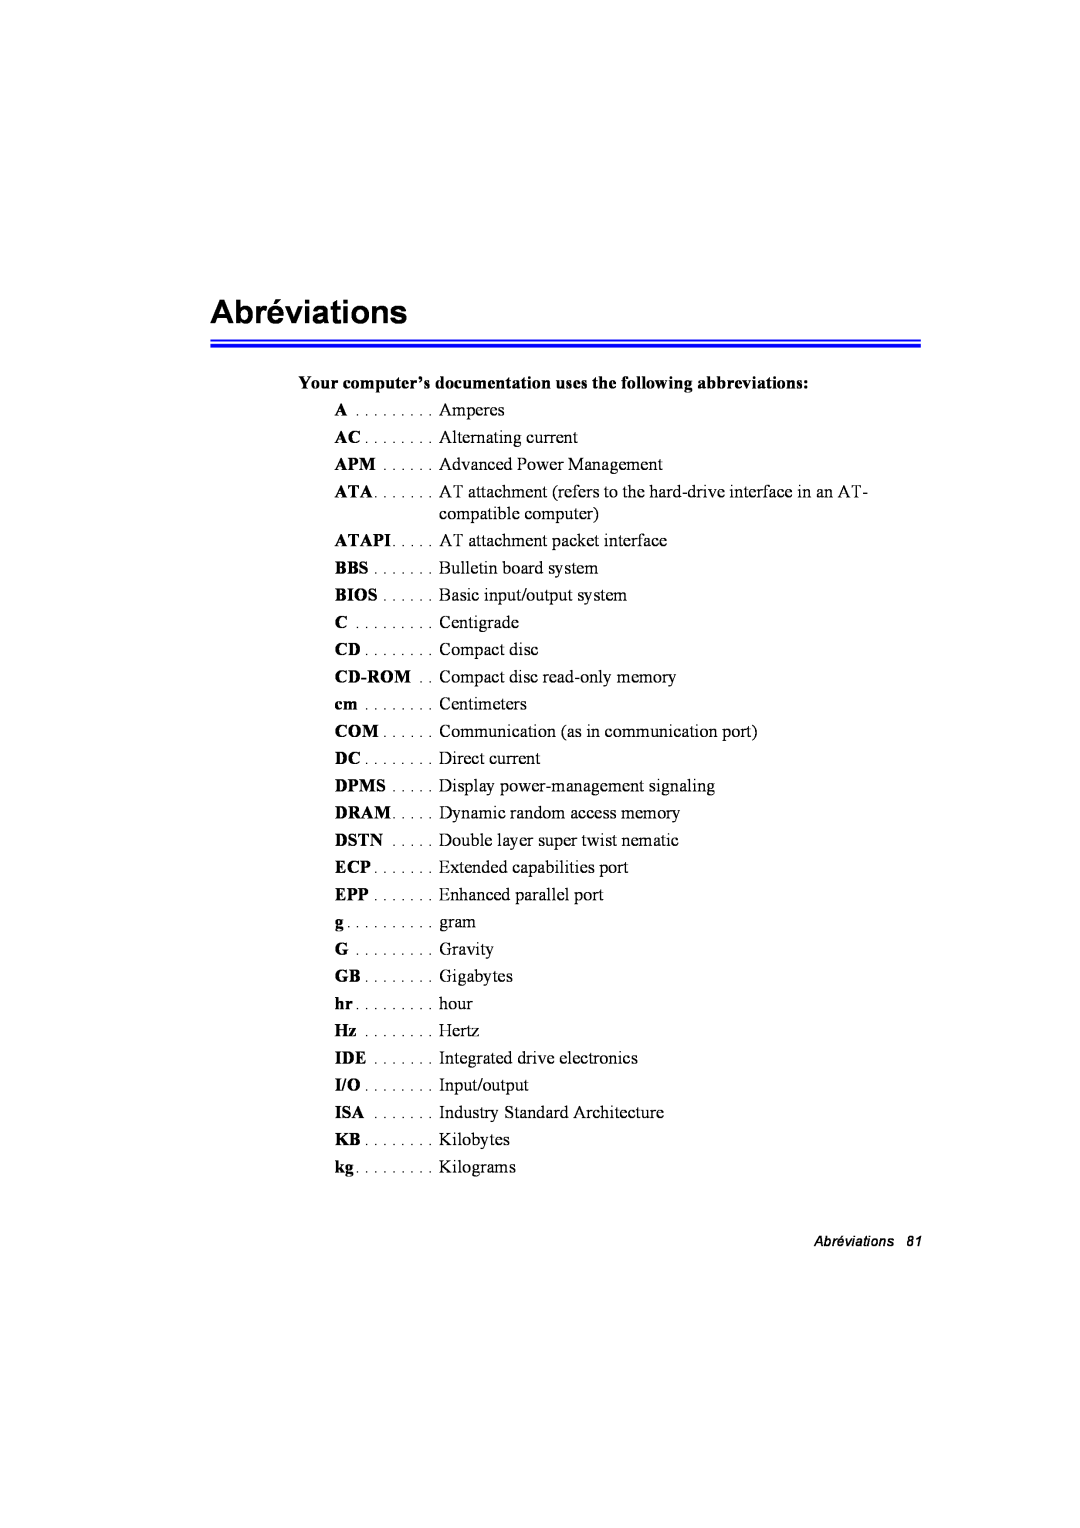 Samsung NP10FJZ002/SEG Abréviations, Your computer’s documentation uses the following abbreviations, Cd-Rom, Gigabytes 